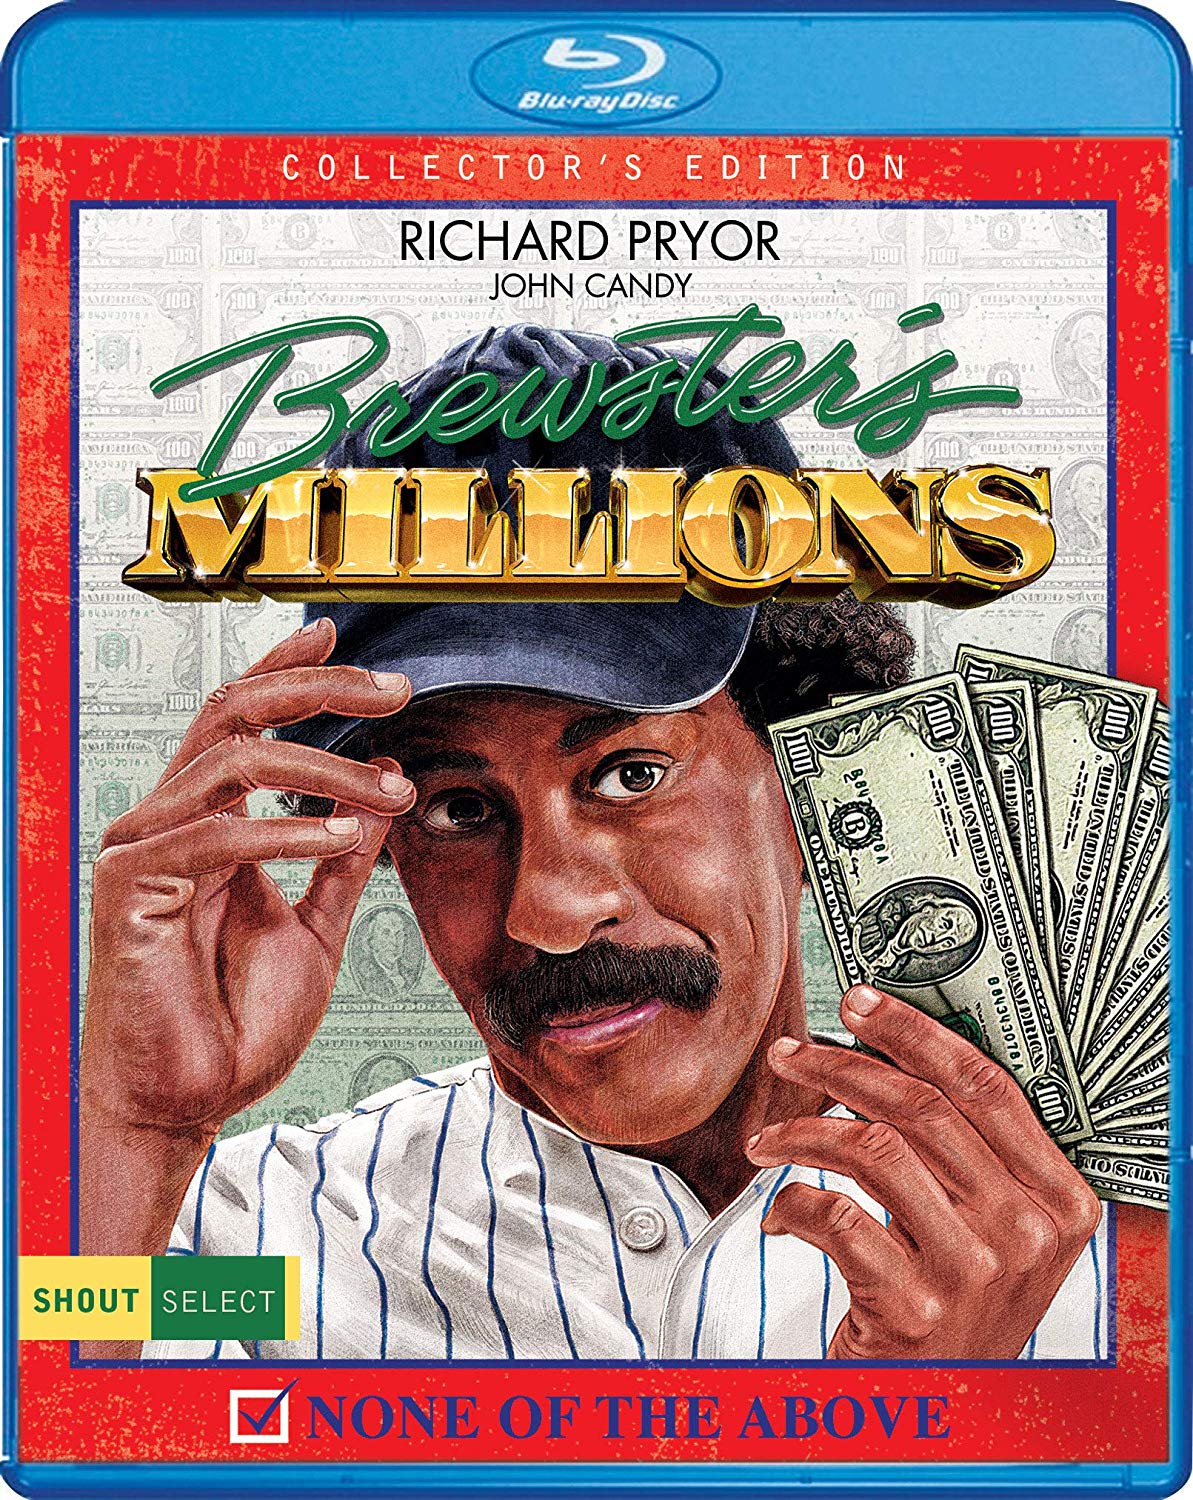 1985 Brewster's Millions